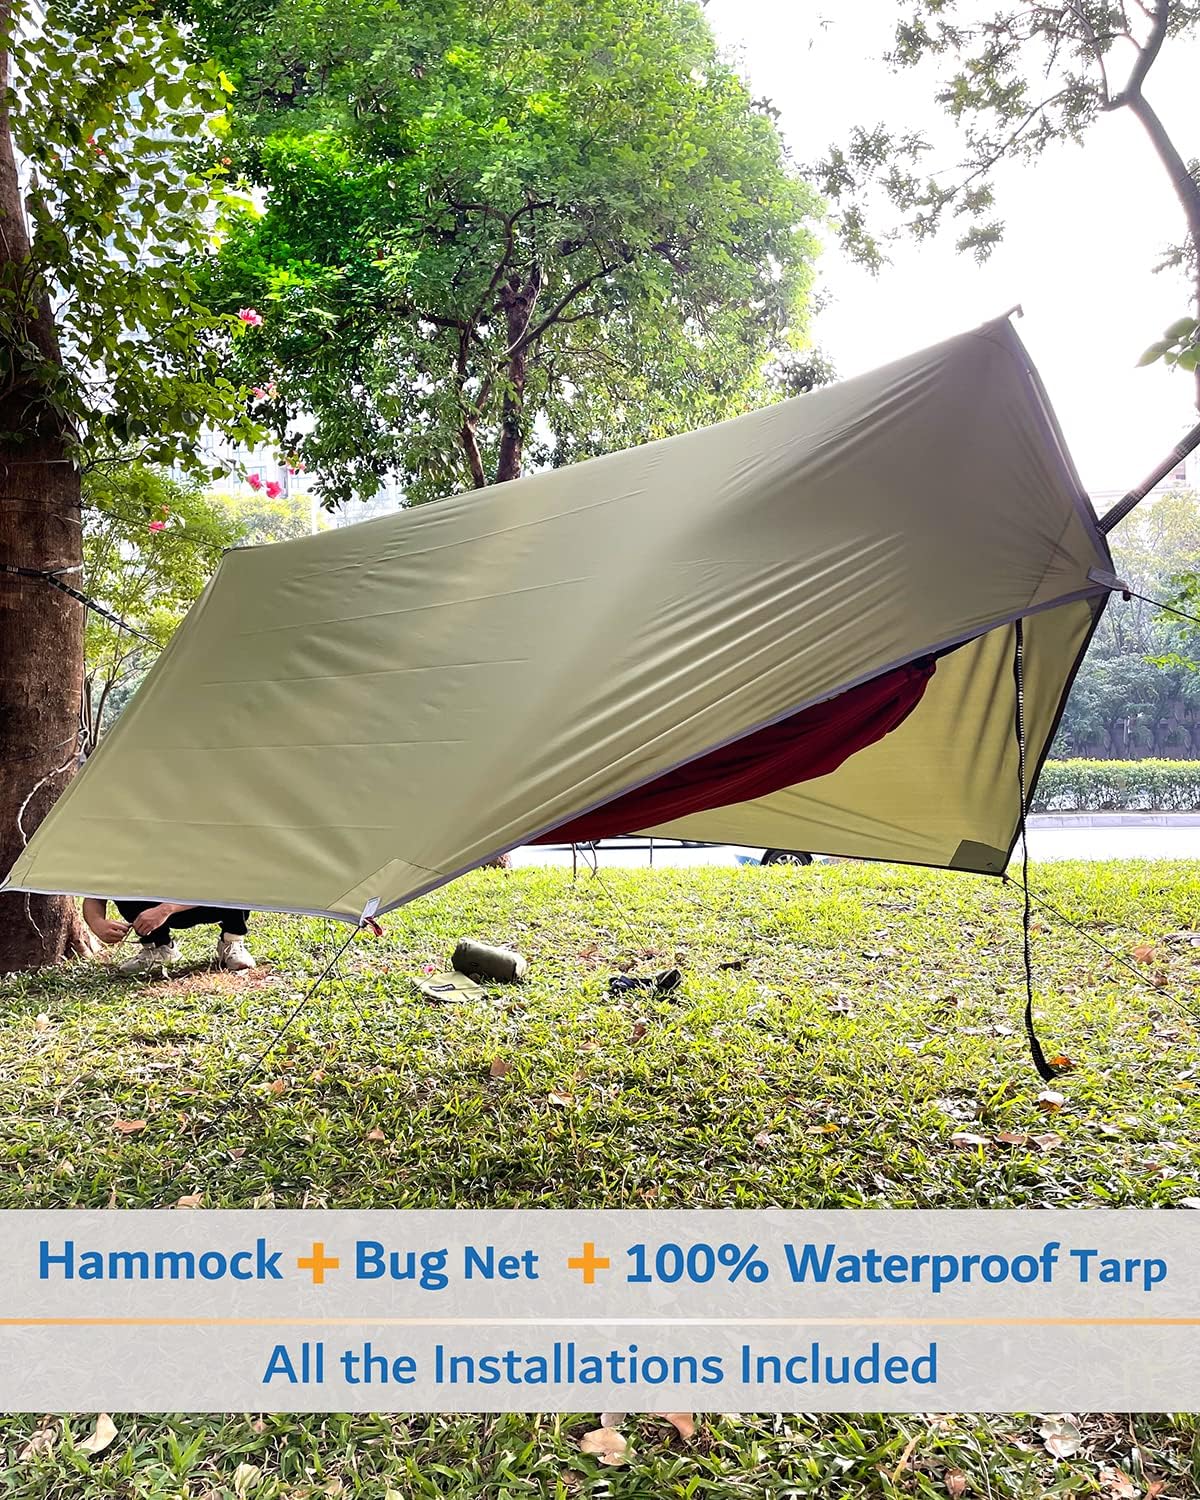 sunyear hammock tent green waterproof package